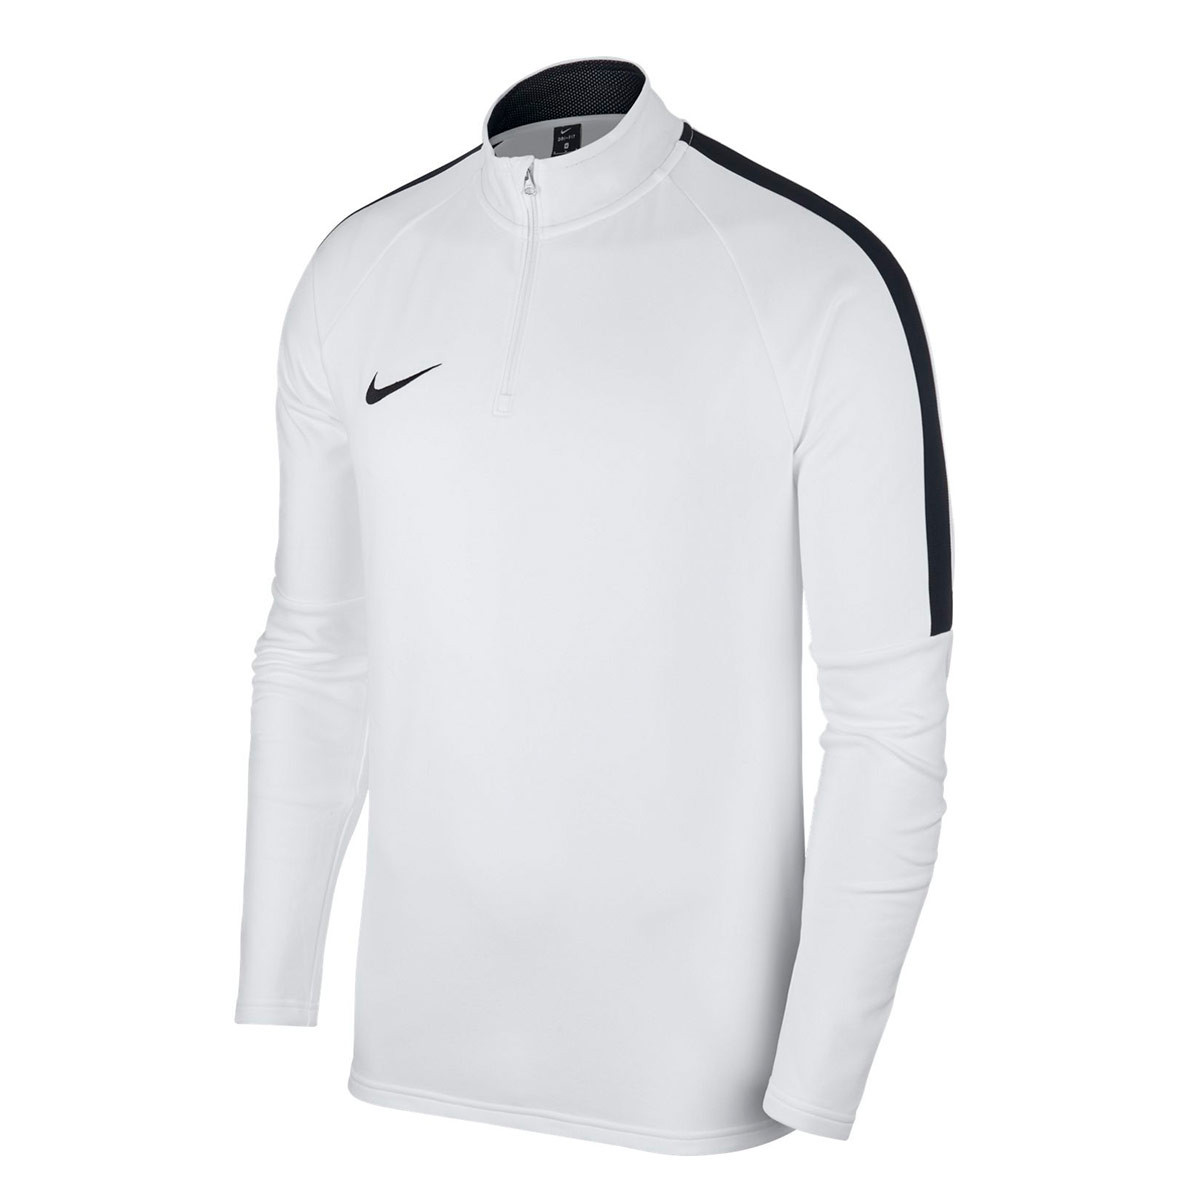 Sweatshirt Nike Academy 18 Drill White-Black - Football store Fútbol Emotion